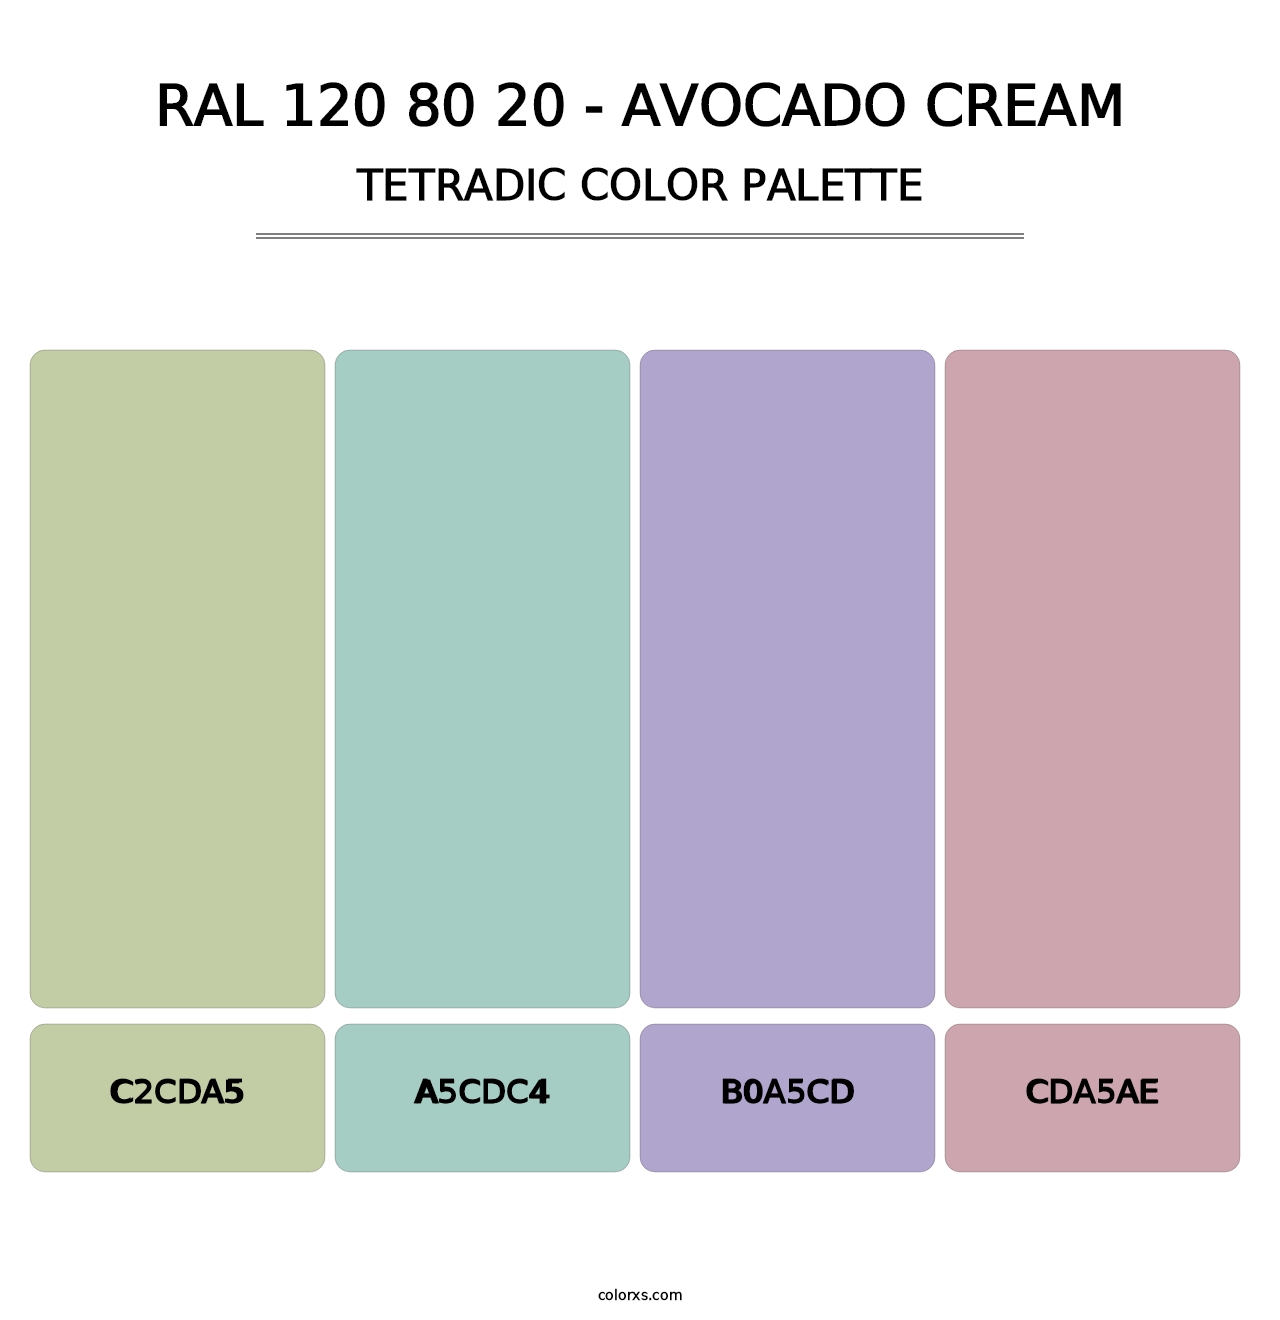 RAL 120 80 20 - Avocado Cream - Tetradic Color Palette